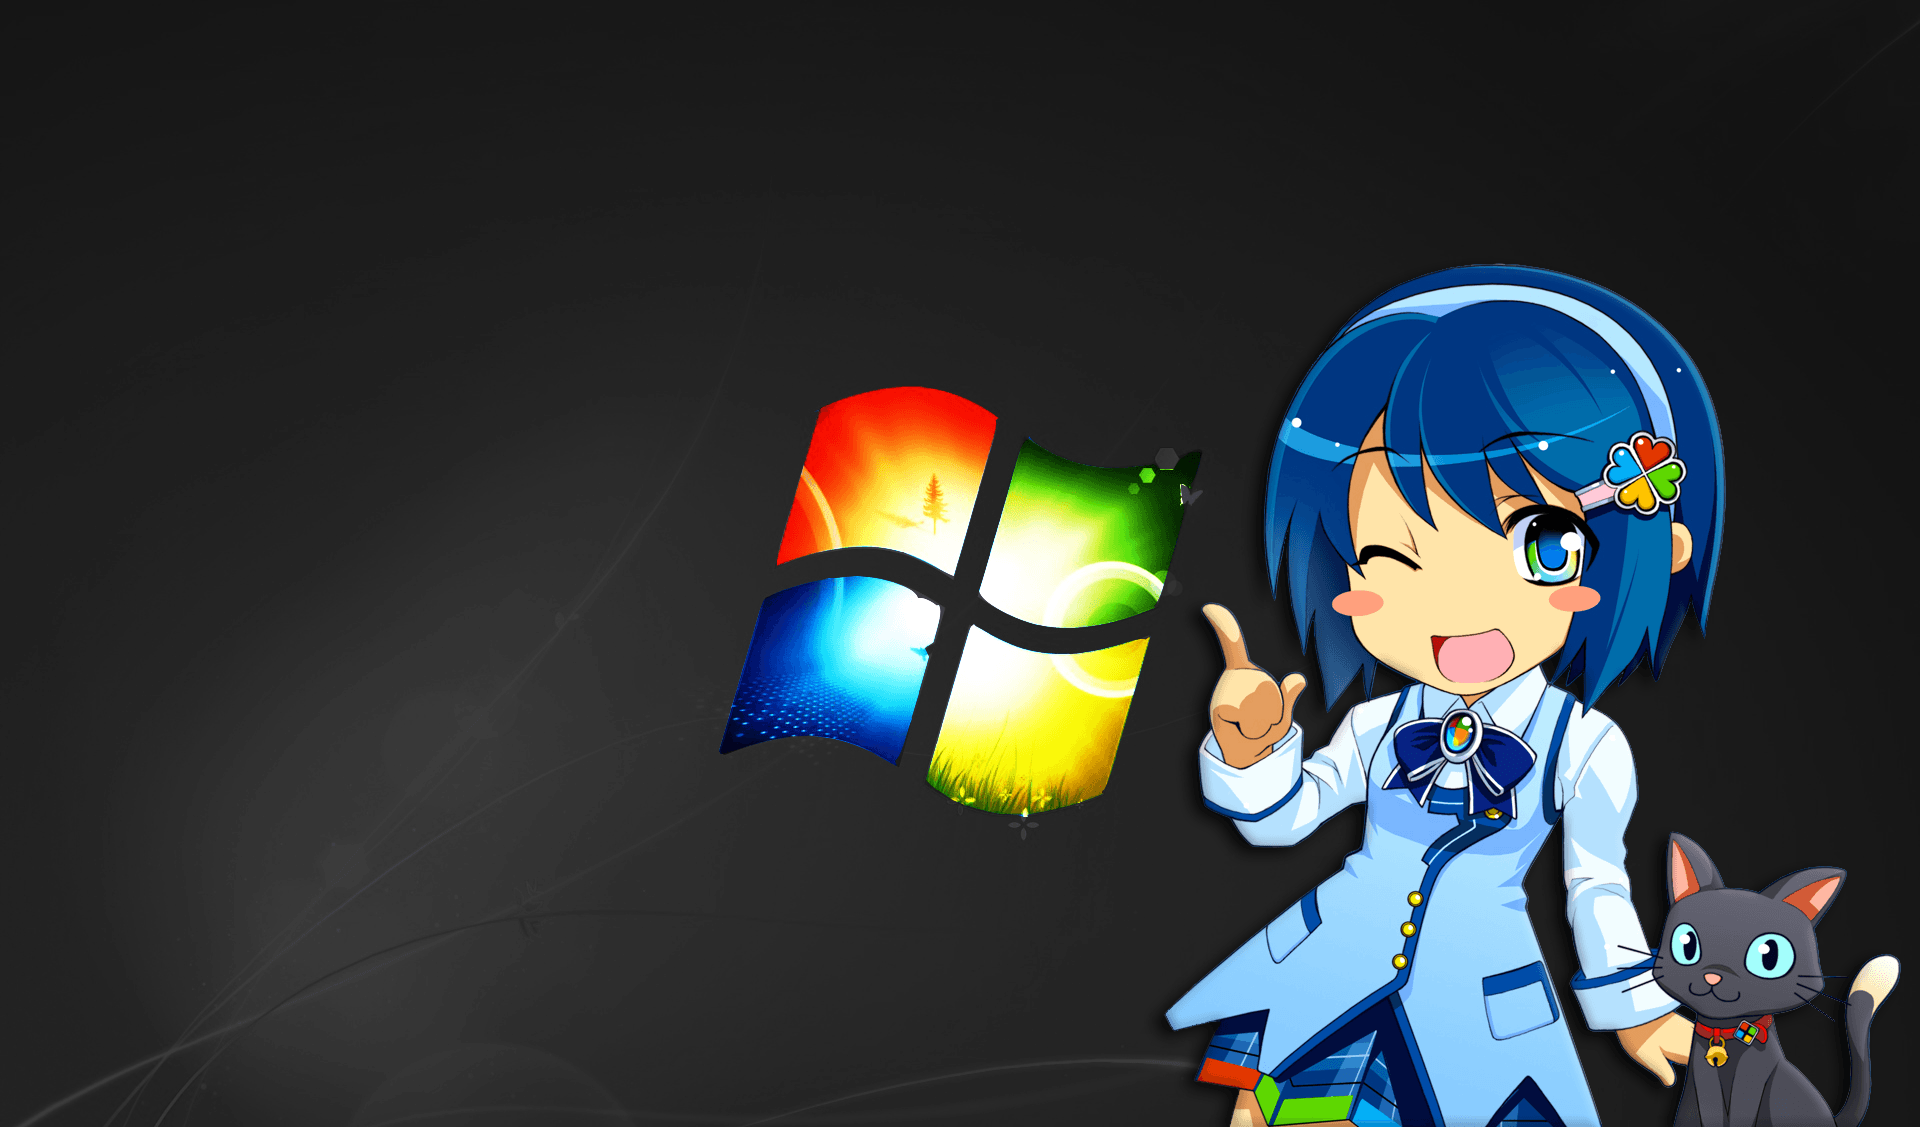 Anime Girls Windows 7 Theme (Windows) - Download